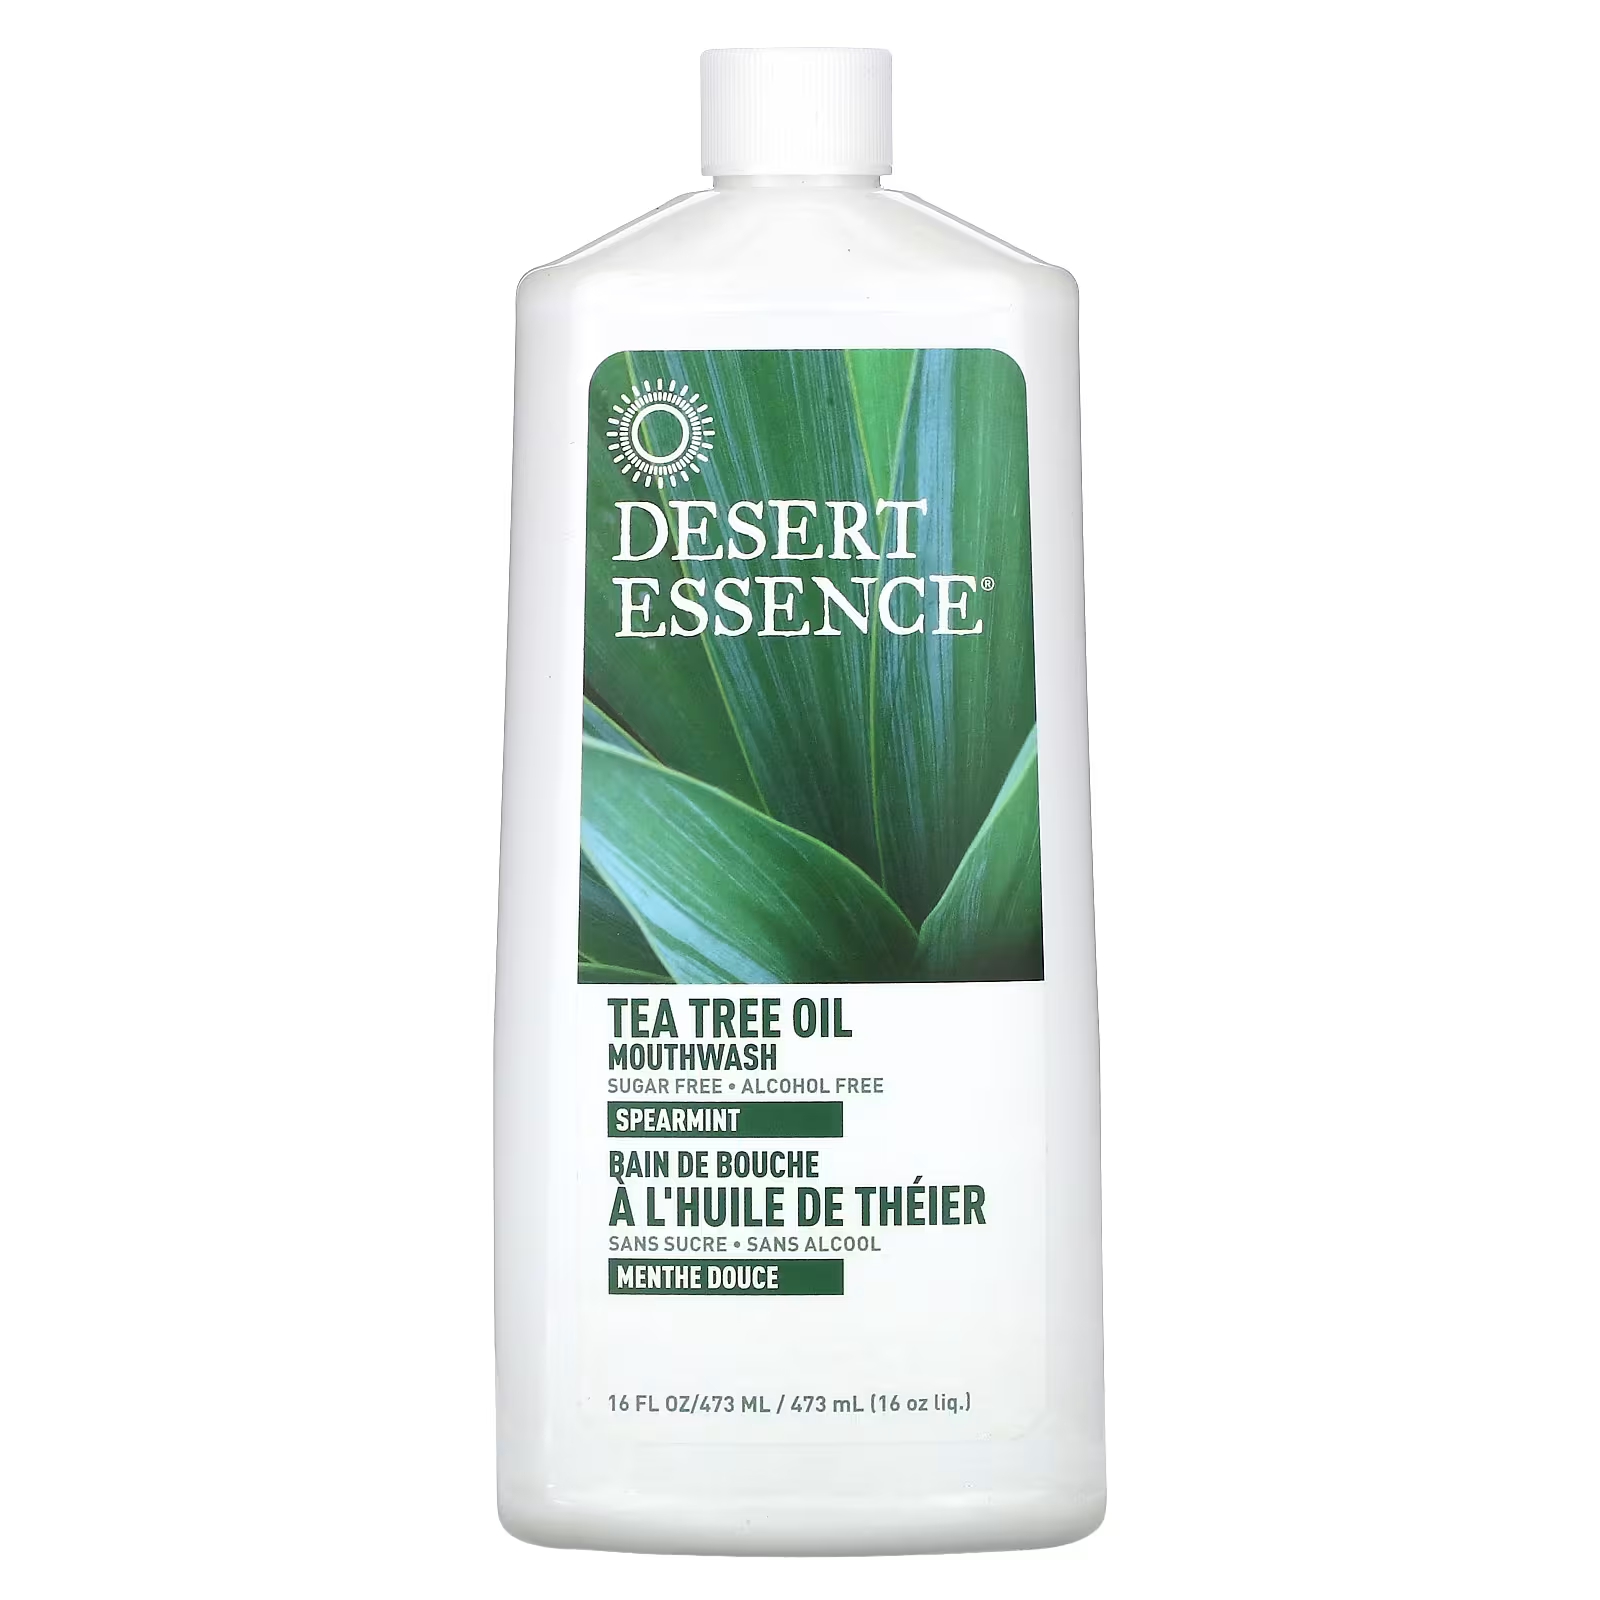 Масло чайного дерева Desert Essence для полоскания рта, 473 мл desert essence foaming hand soap pods starter kit tea tree oil